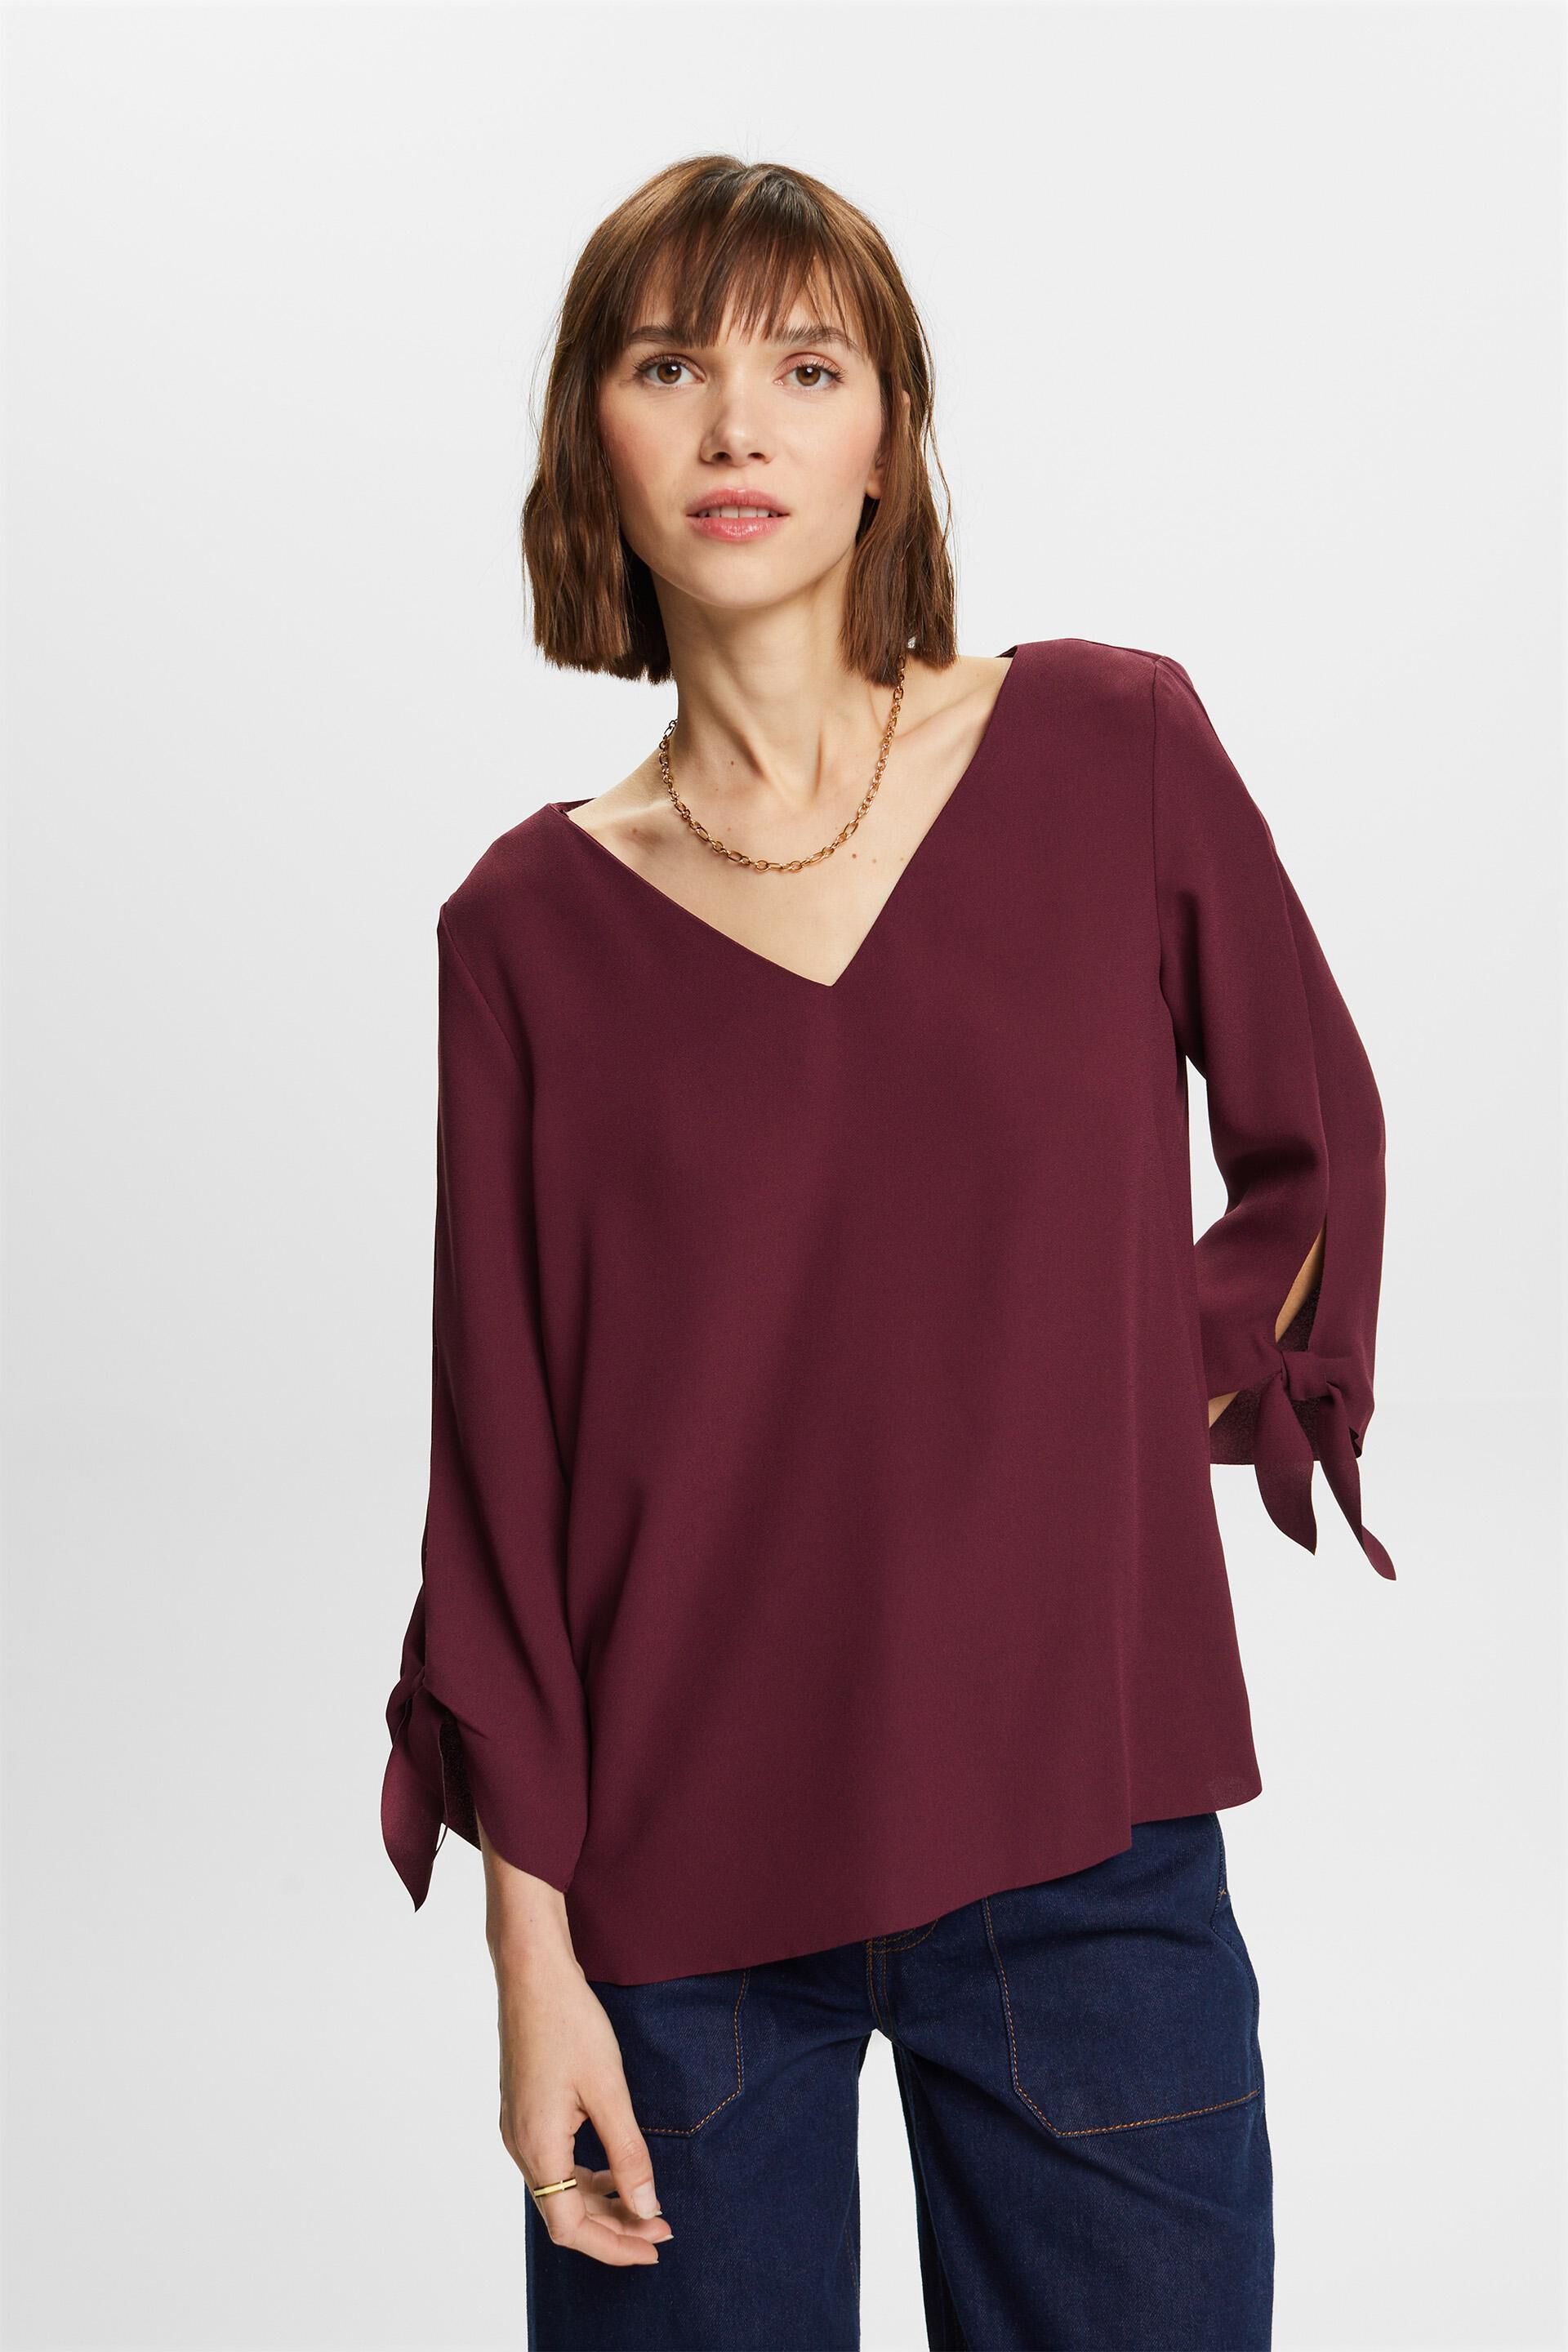 Esprit blouse with edges open Stretch